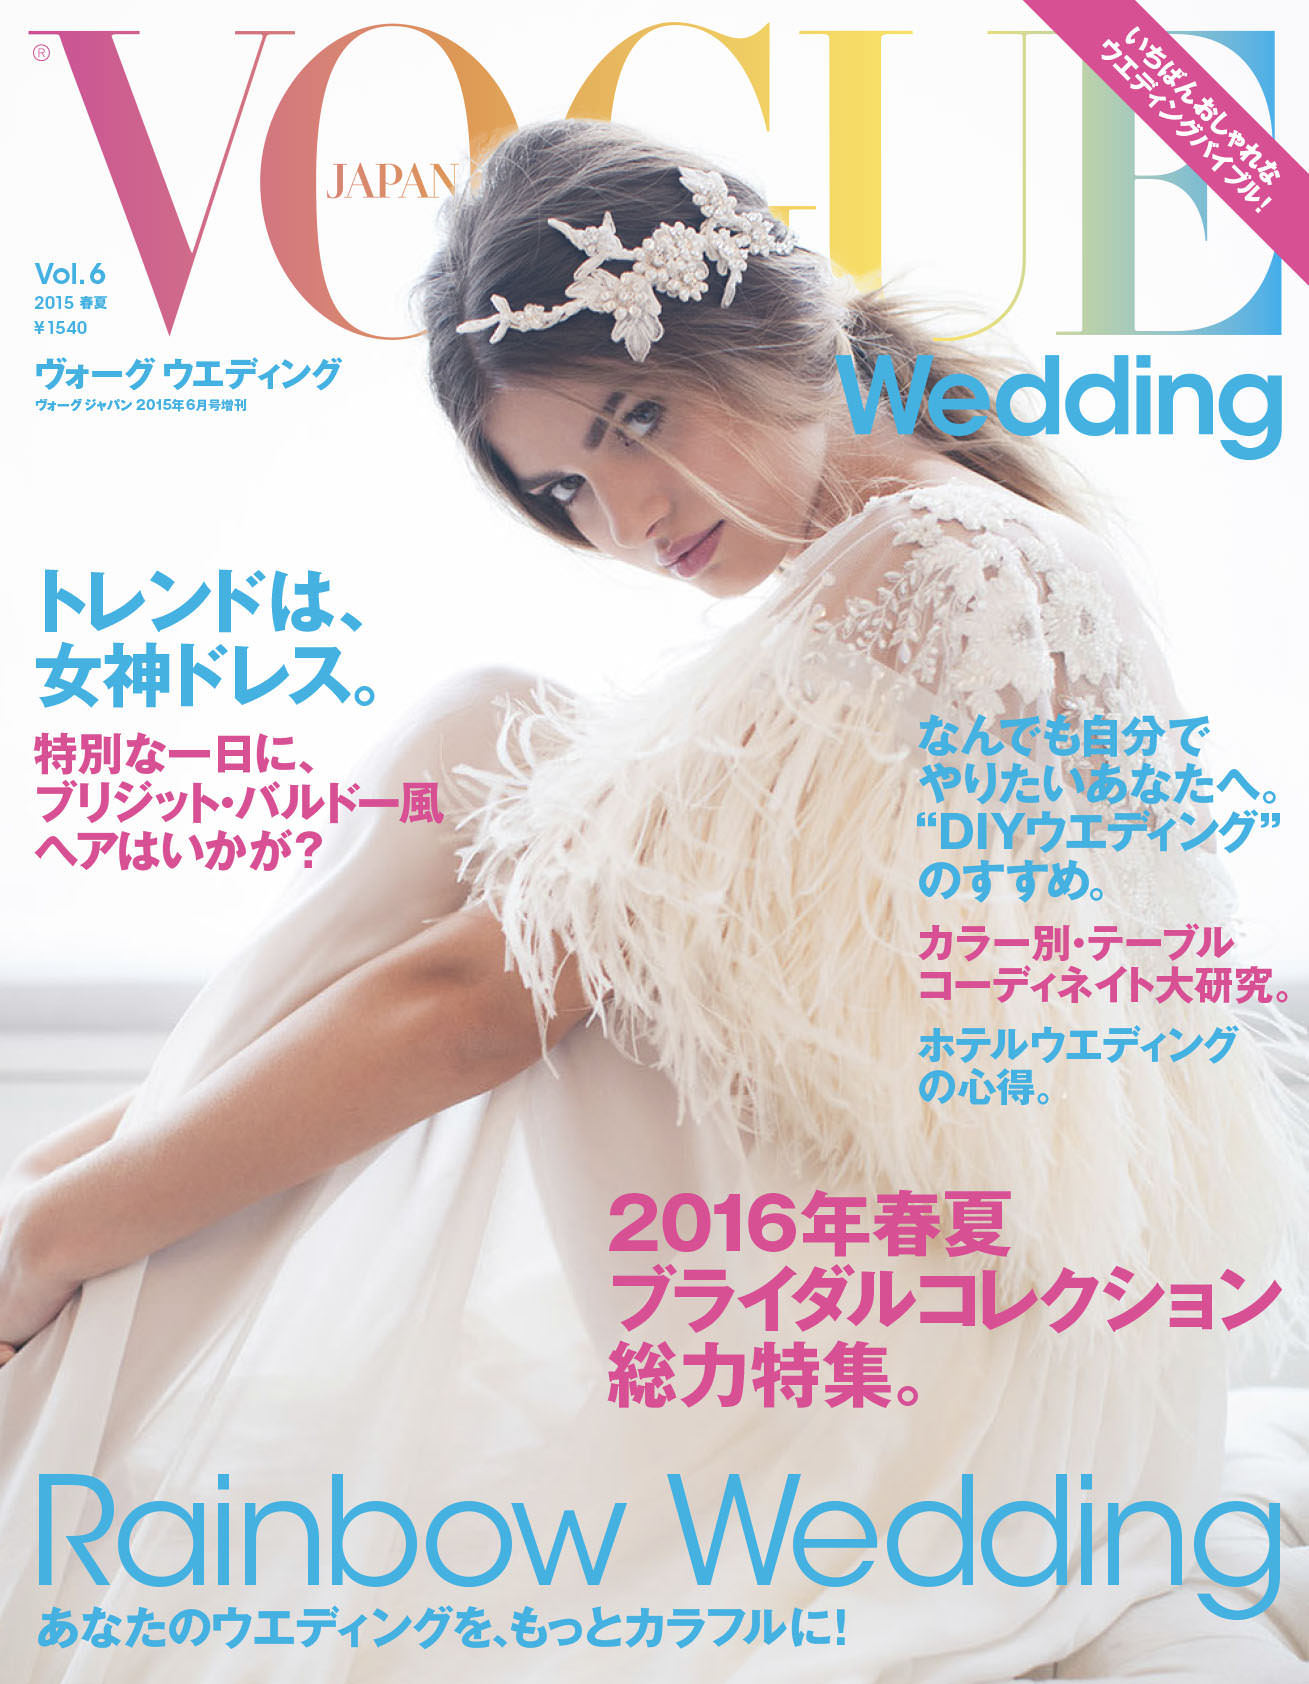 Vogue Japan Wedding Cover